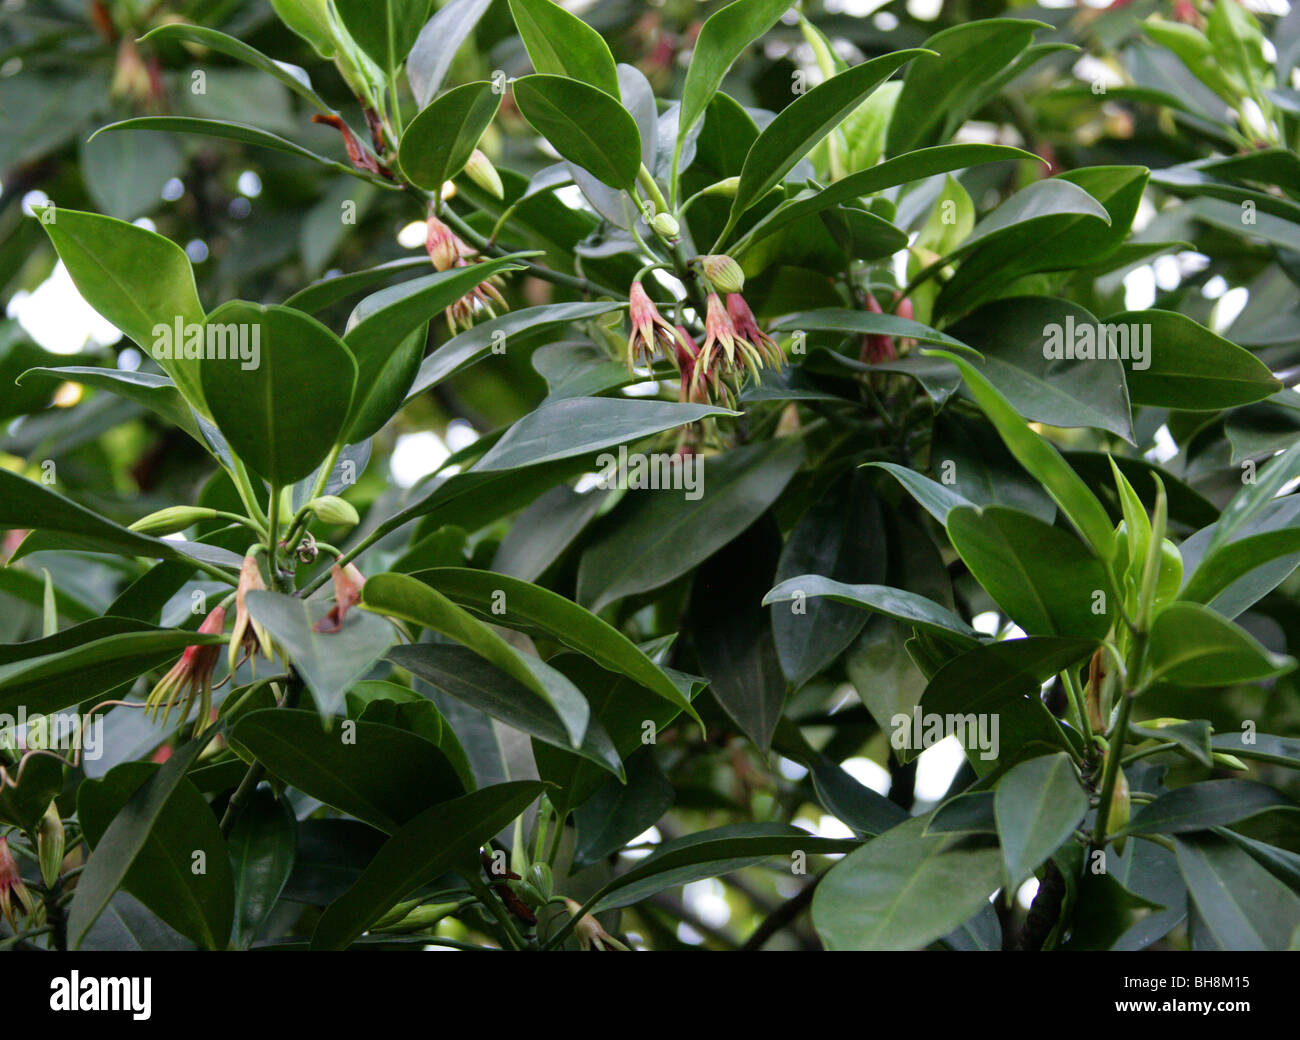 Burma Mangrove, Mangrove or Oriental Mangrove, Bruguiera gymnorrhiza, Rhizophoraceae, Tropical Asia and Pacific, Australasia. Stock Photo